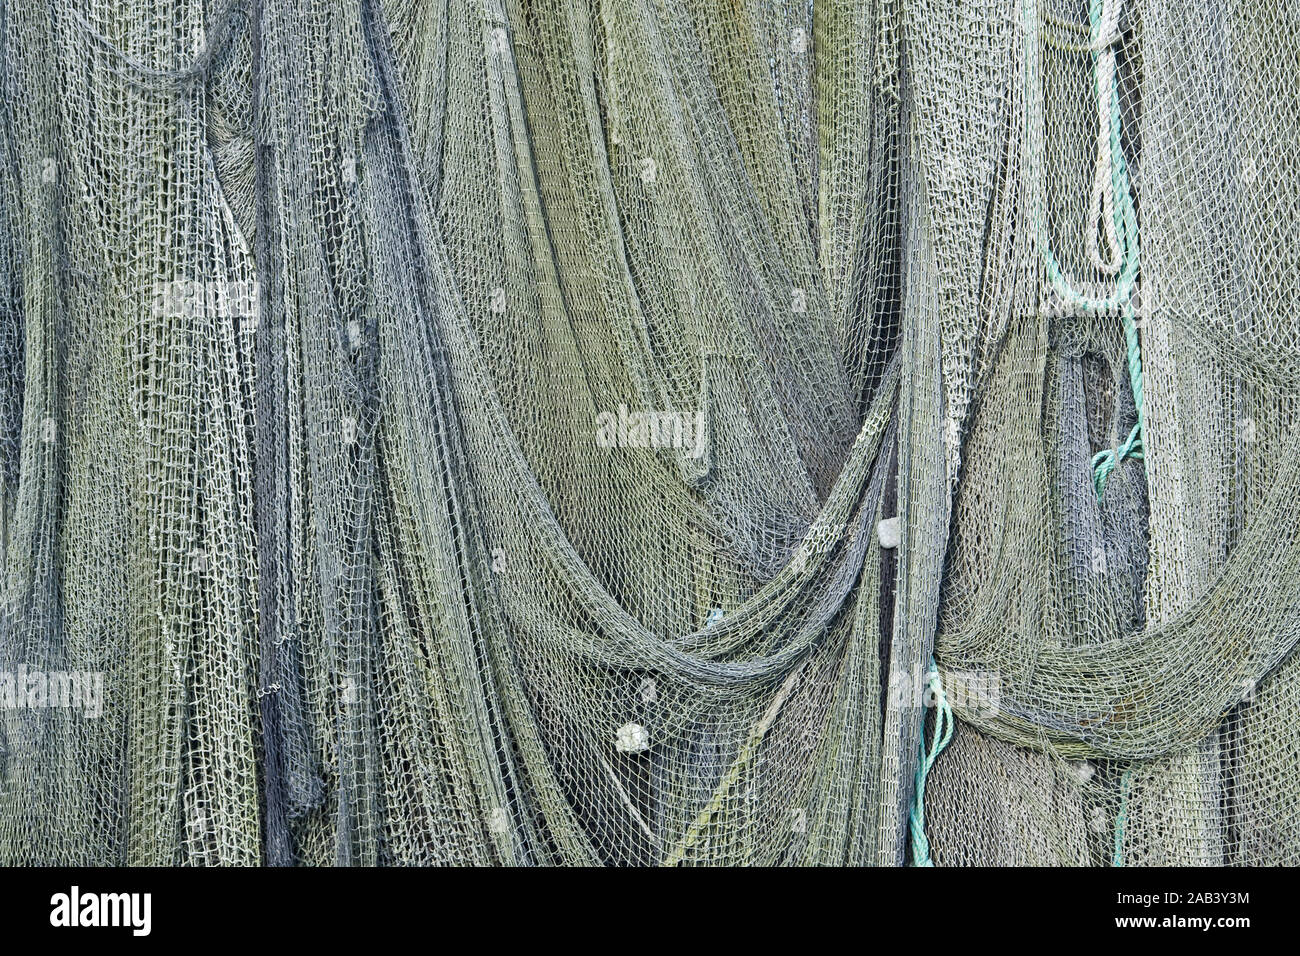 Fischernetze im Fischereihafen |reti da pesca nel porto di pescatori| Foto Stock